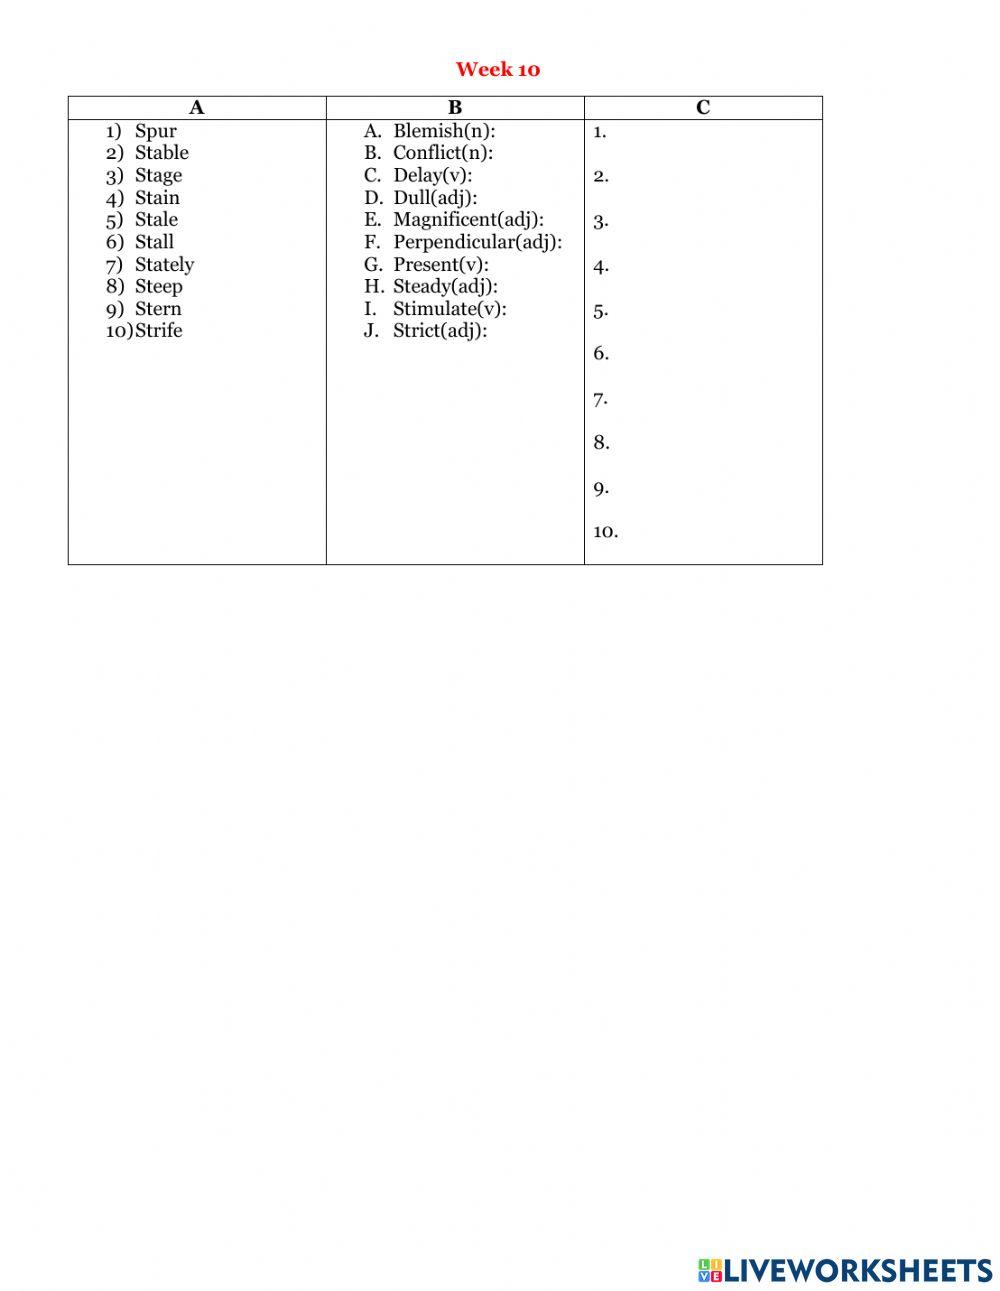 Ifl synonyms level 1(week 9-12)